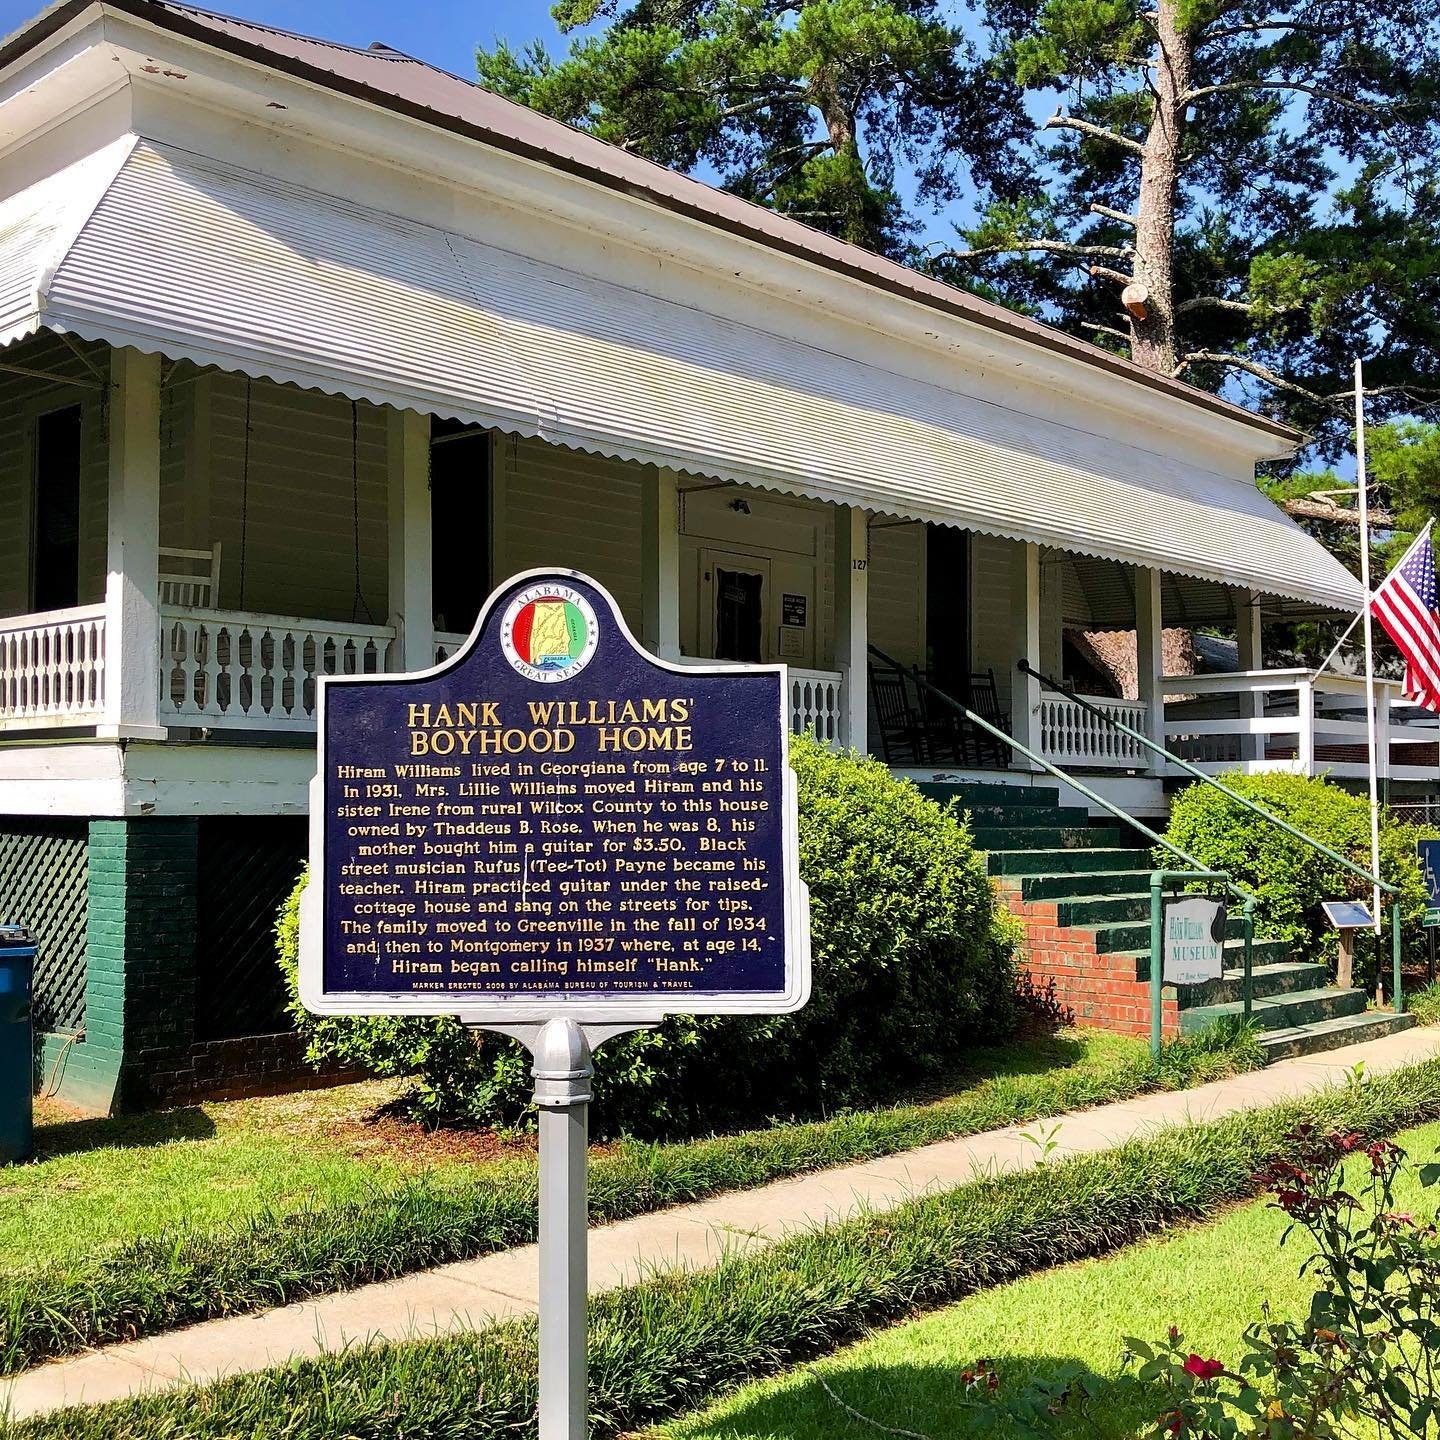 Hank Williams Boyhood Home in Georgiana, Alabama.